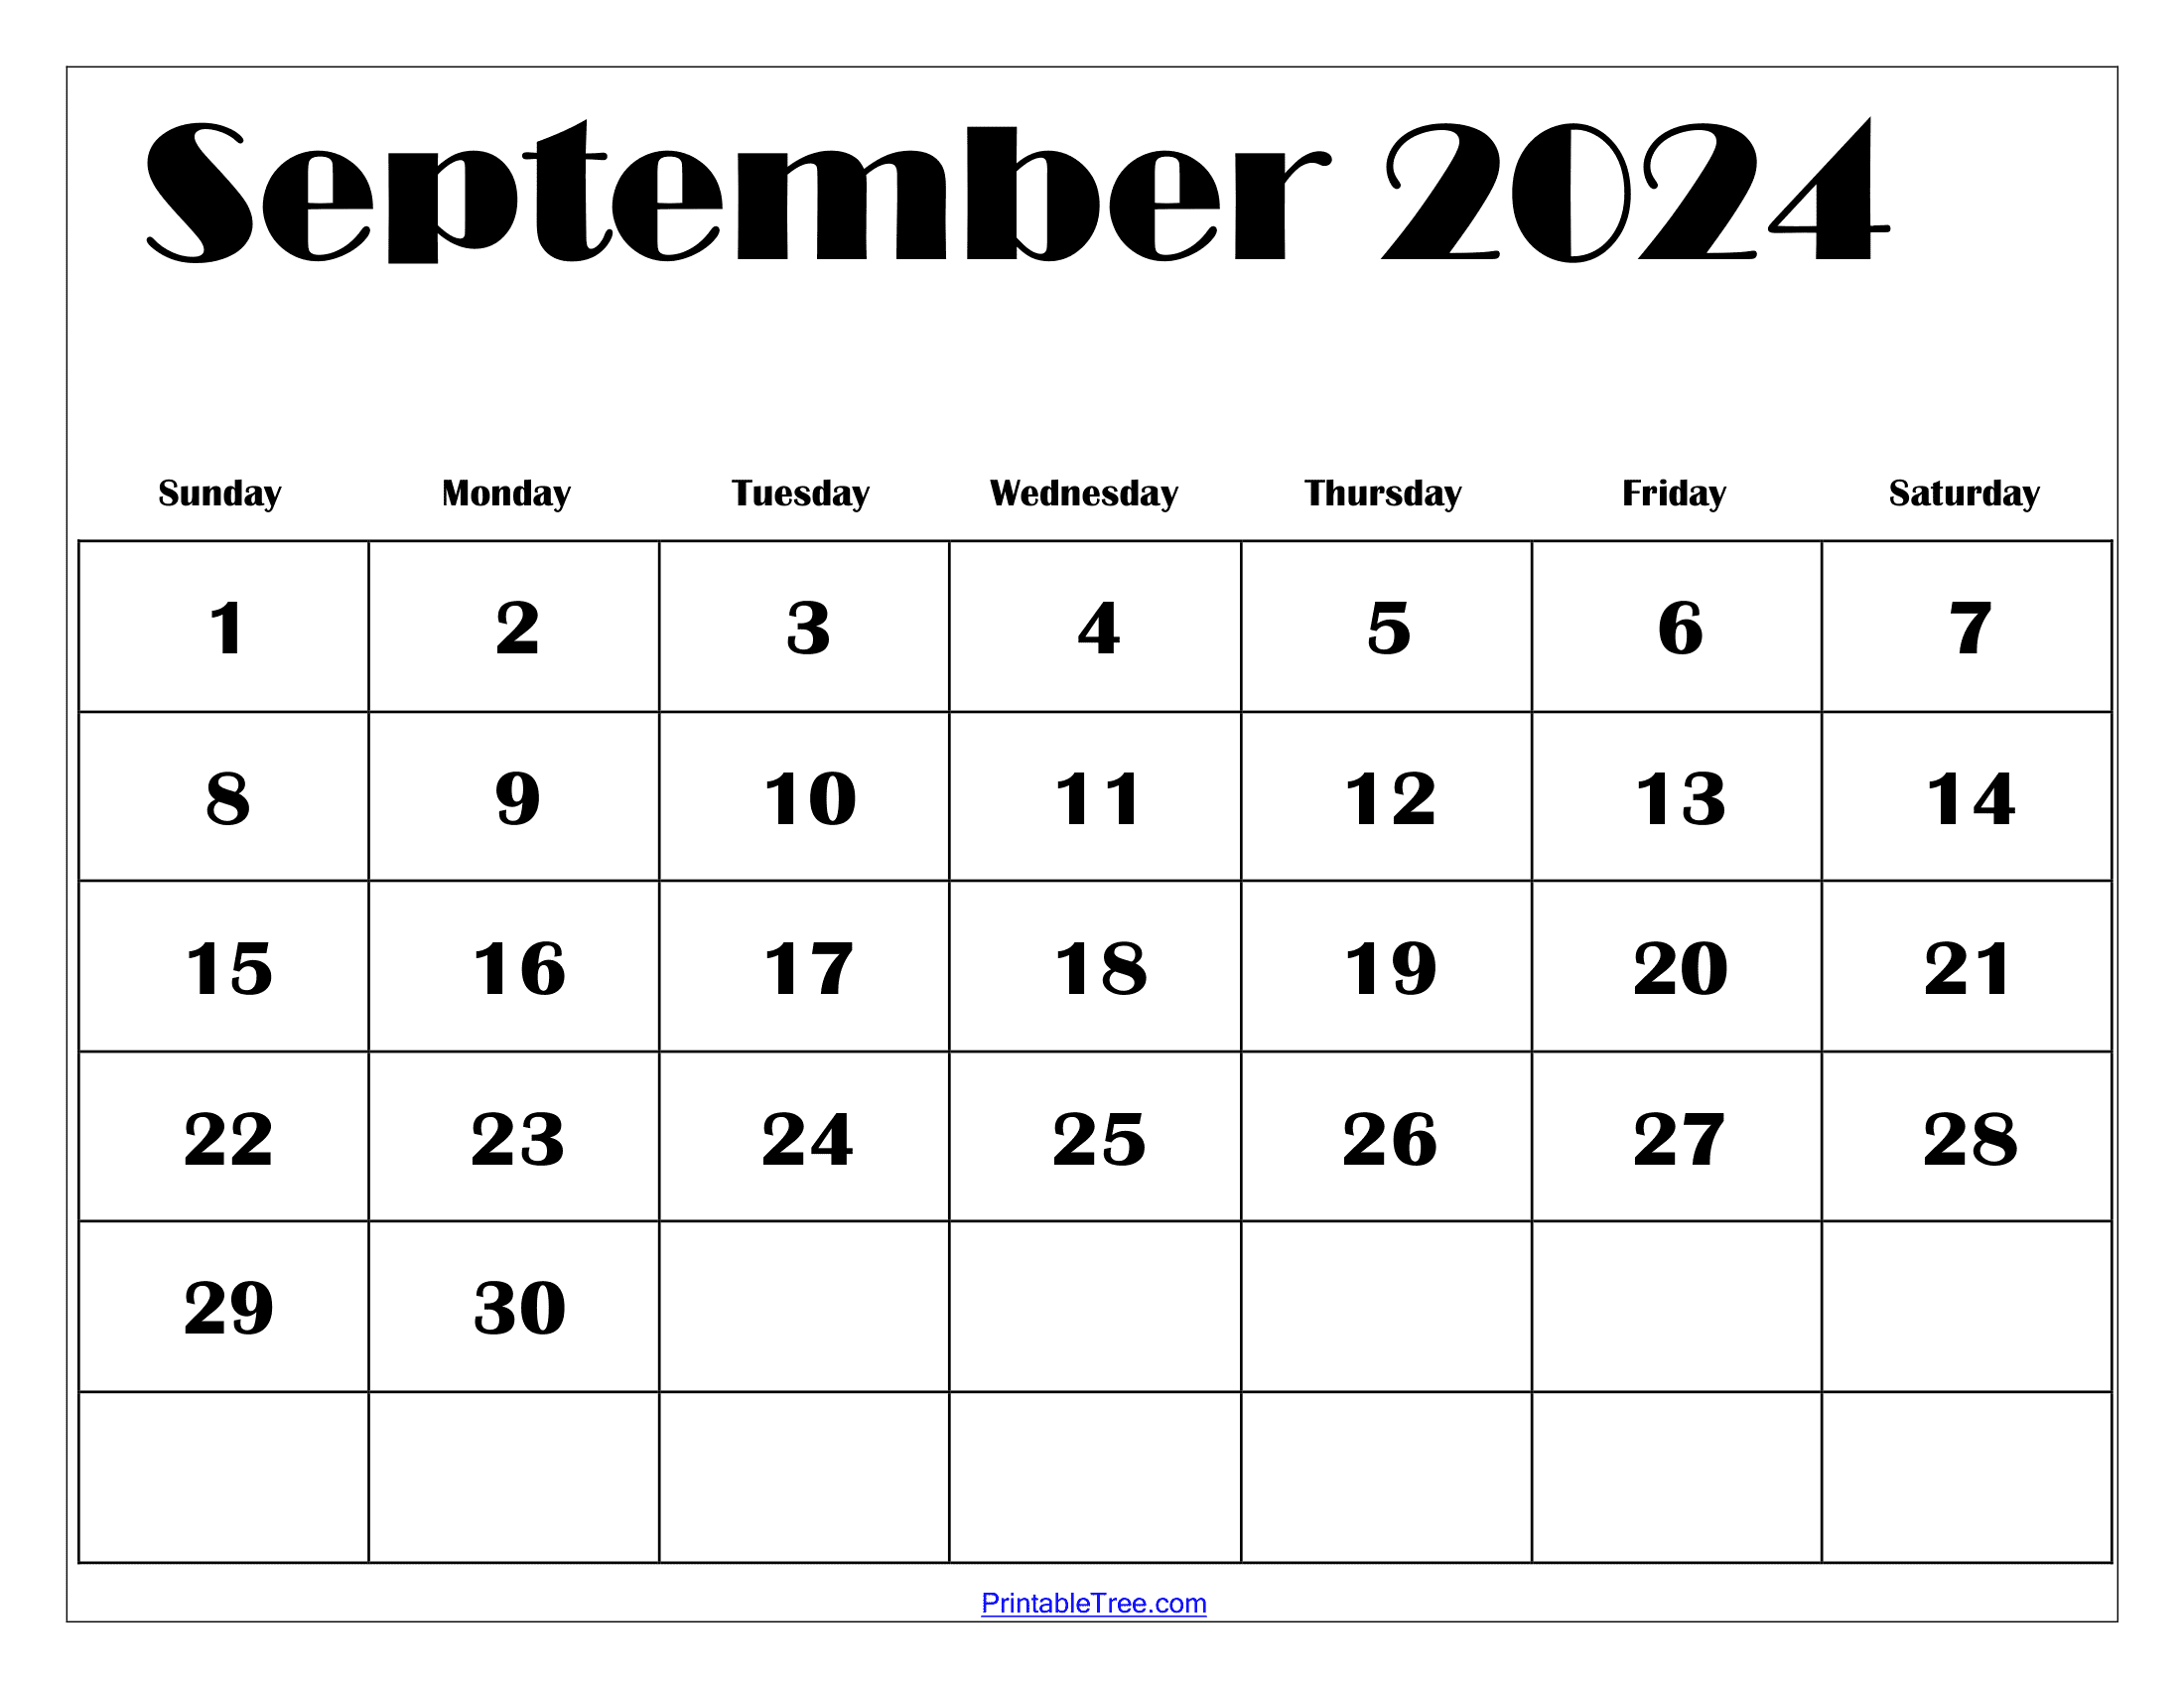 September 2024 Calendar Printable Pdf With Holidays for September 2024 Printable Calendar With Holidays